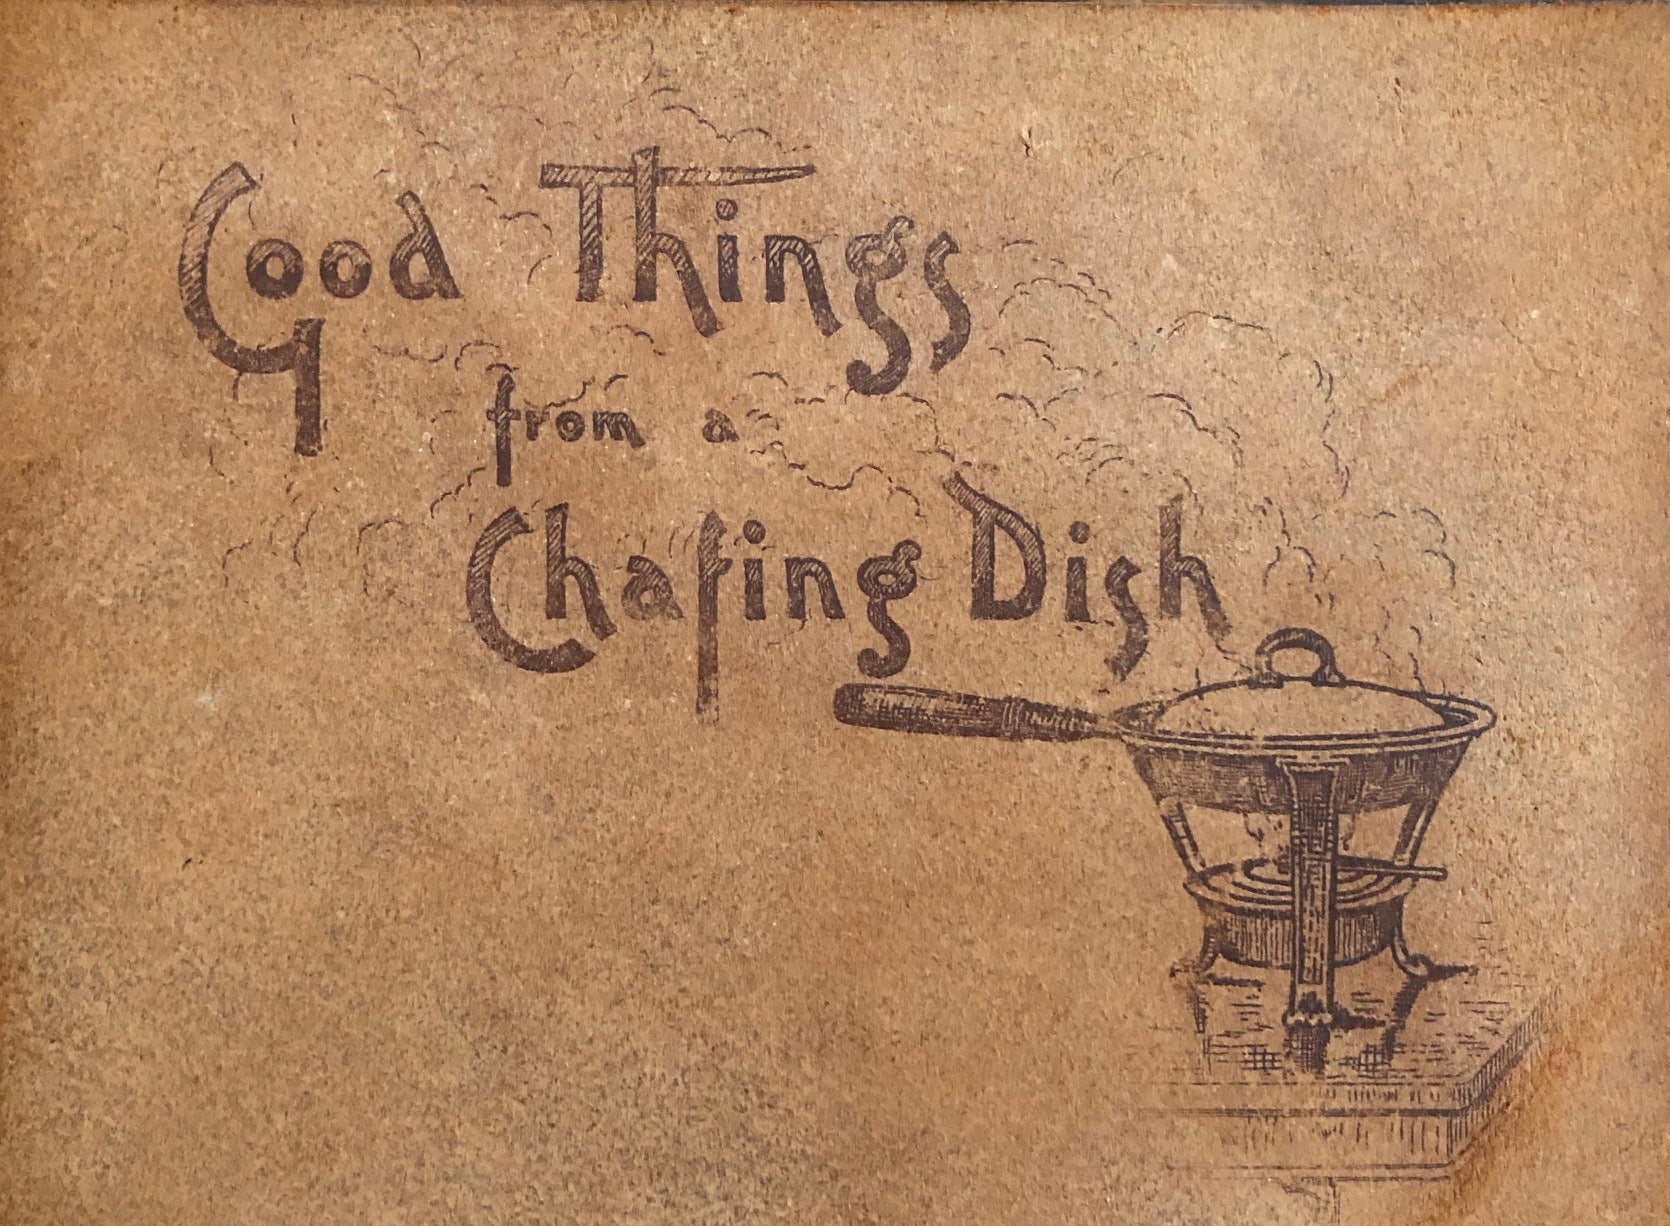 (Chafing Dish) Thomas Murrey. Good Things from a Chafing Dish.